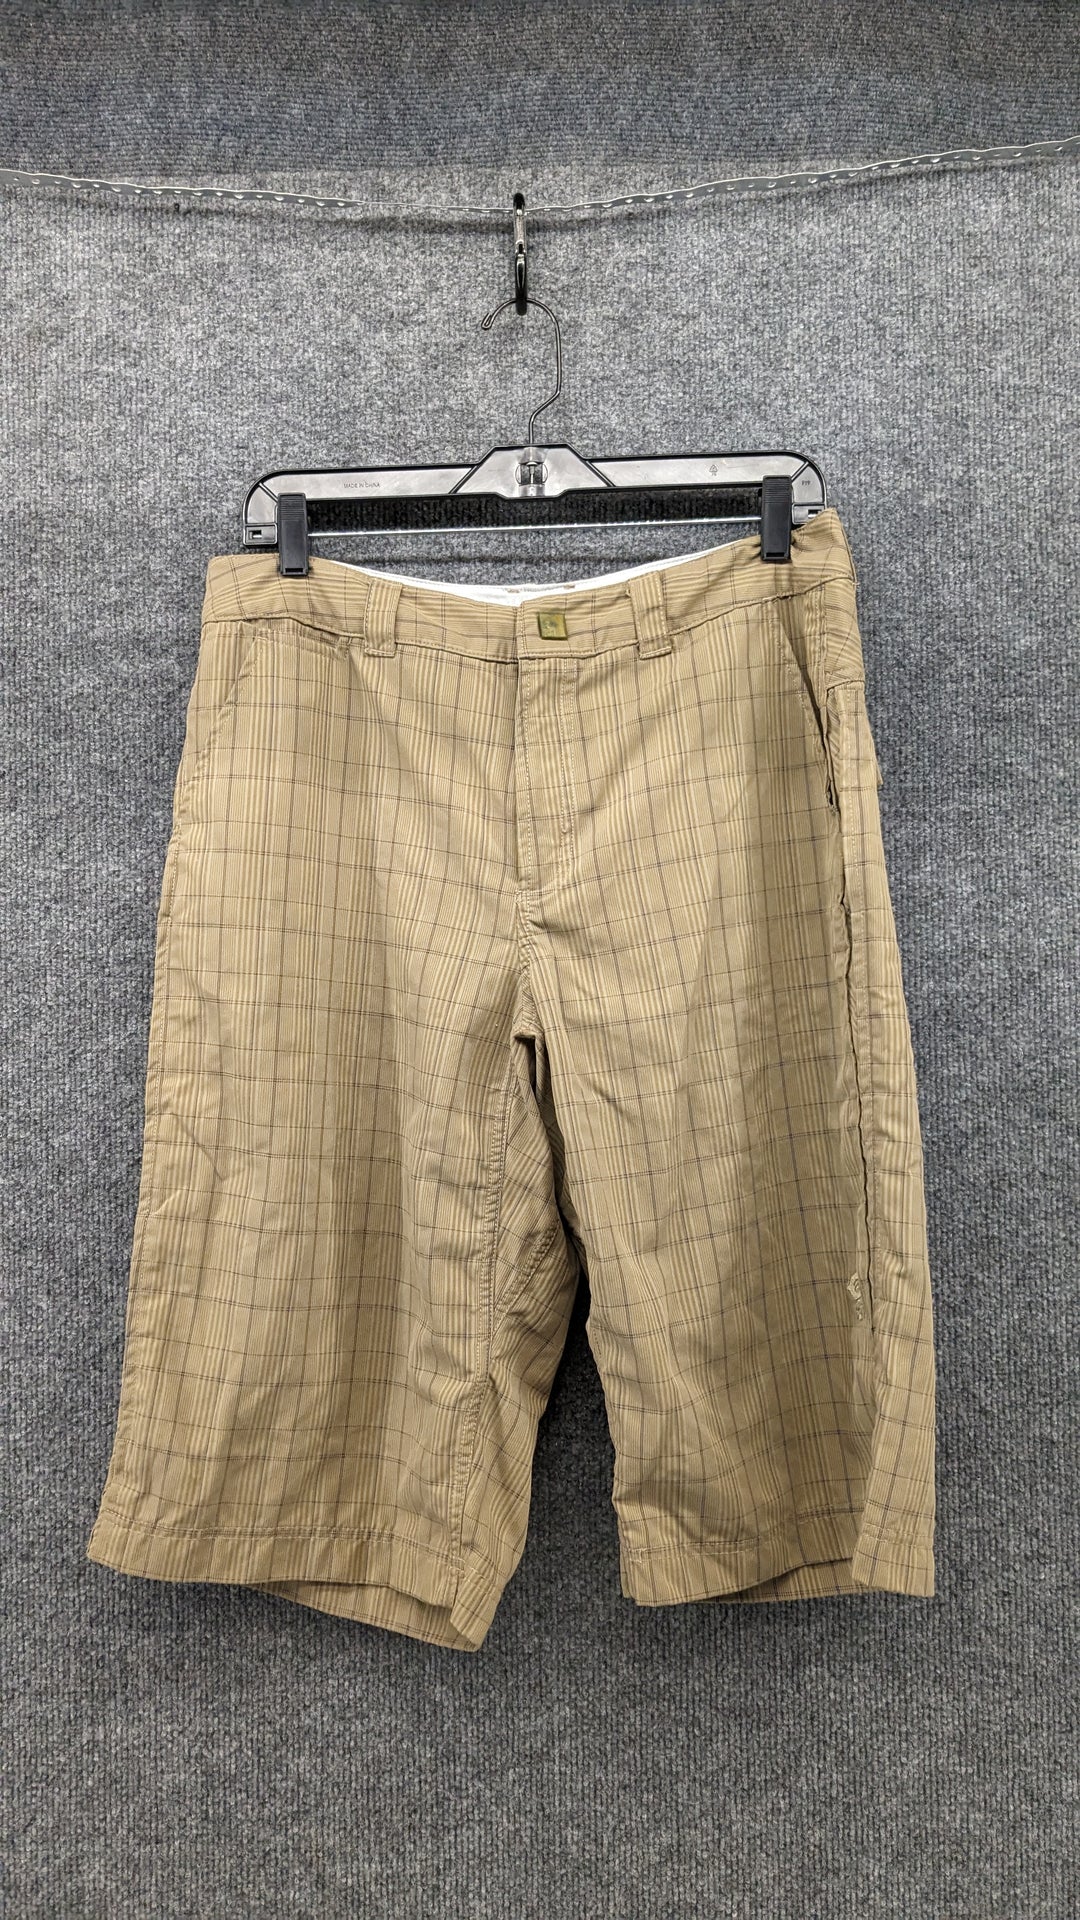 Mountain Hardwear Size 34 Men's Casual Shorts